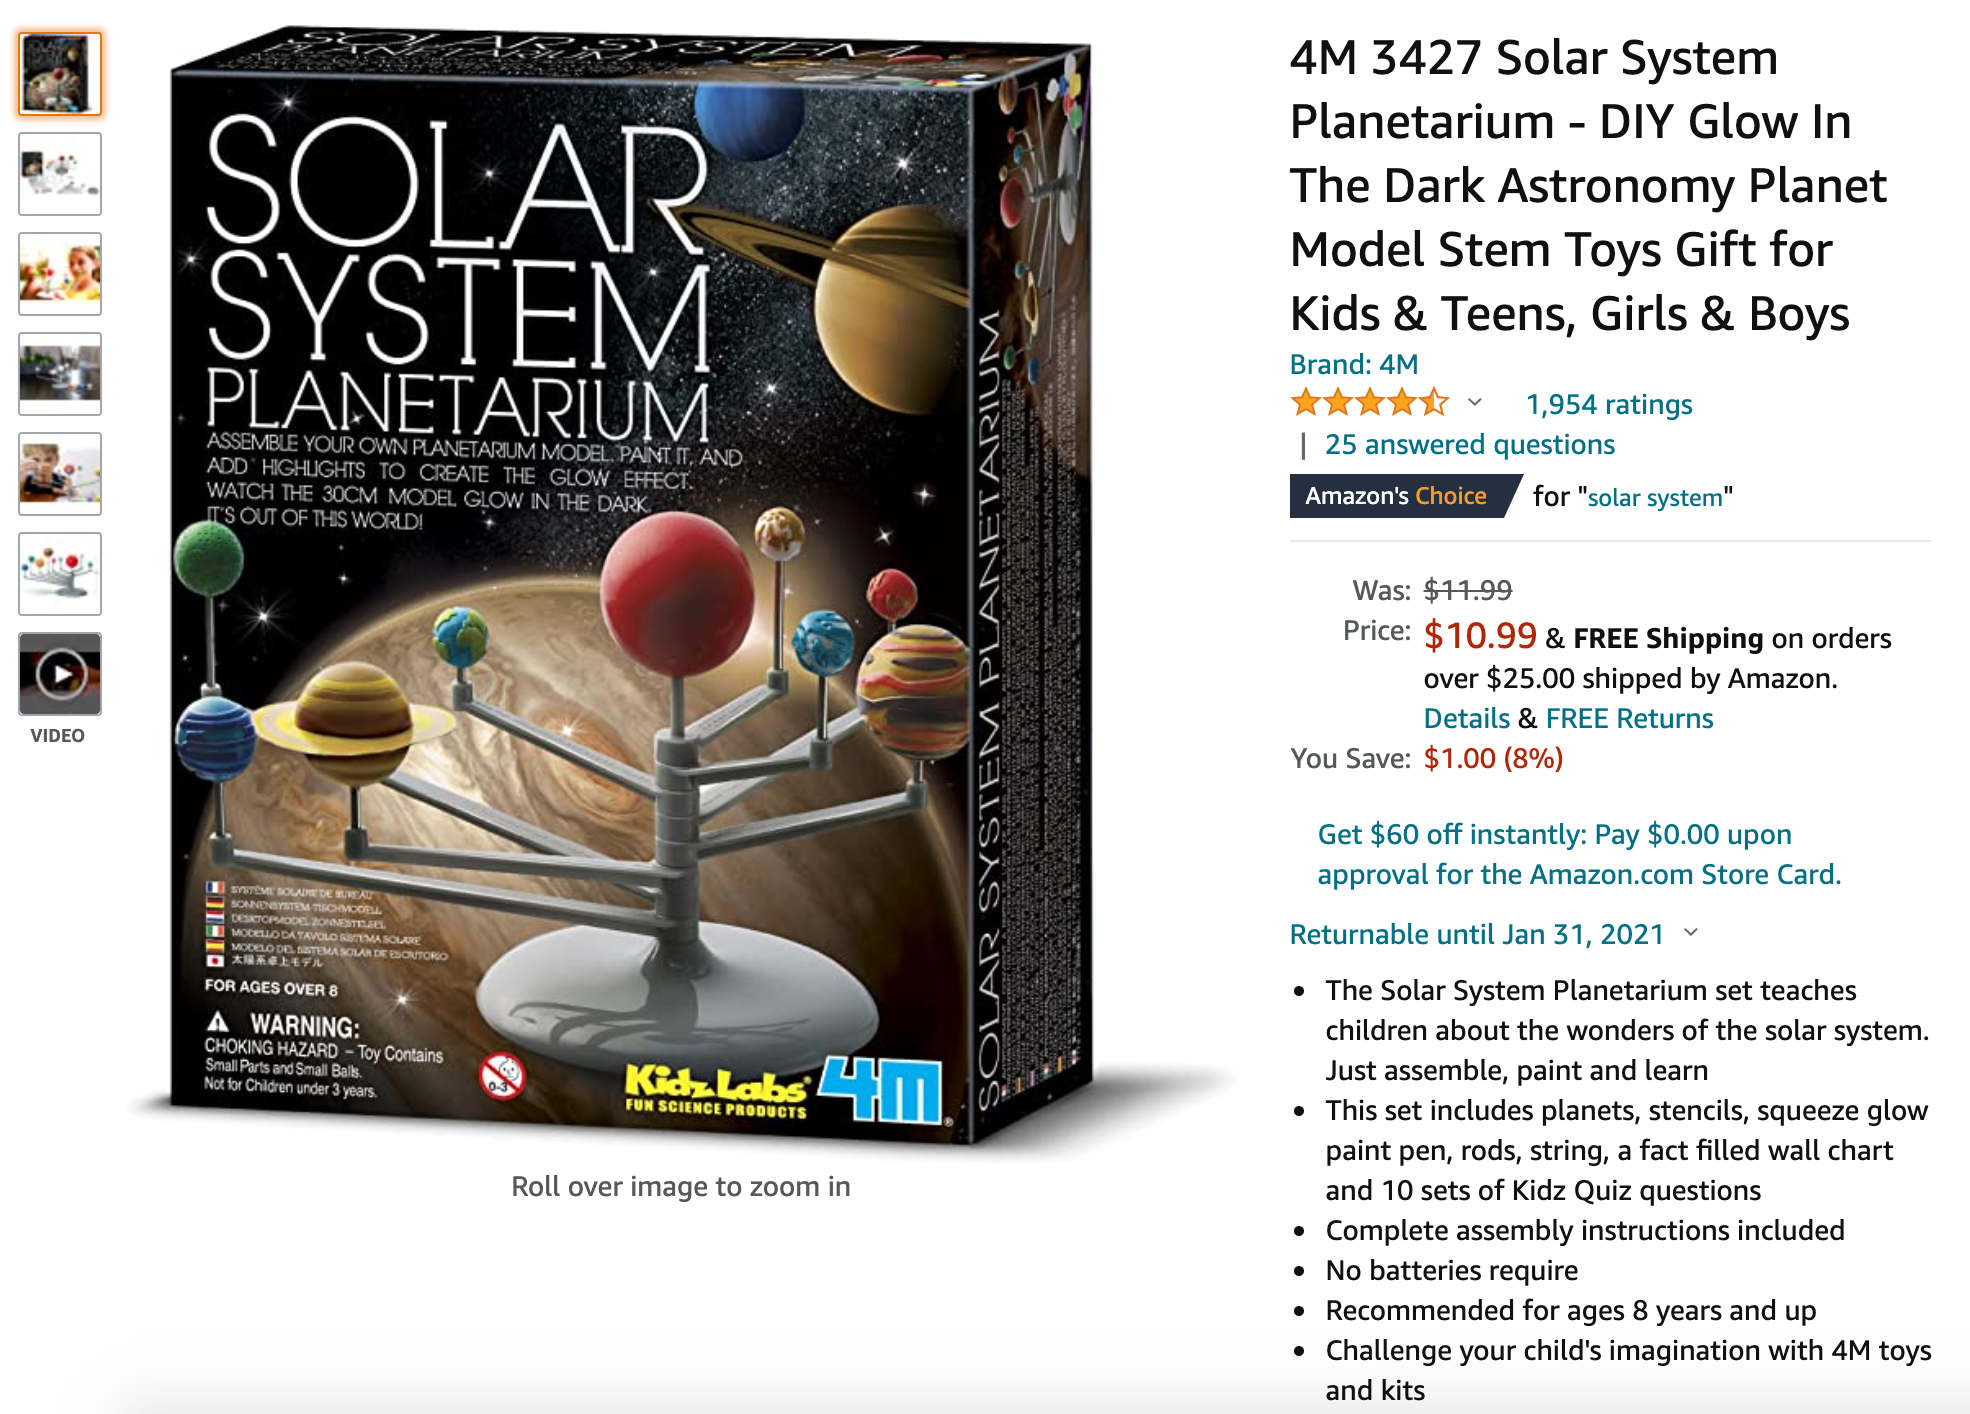 4M 3427 Solar System Planetarium - DIY Glow In The Dark Astronomy Planet.jpg